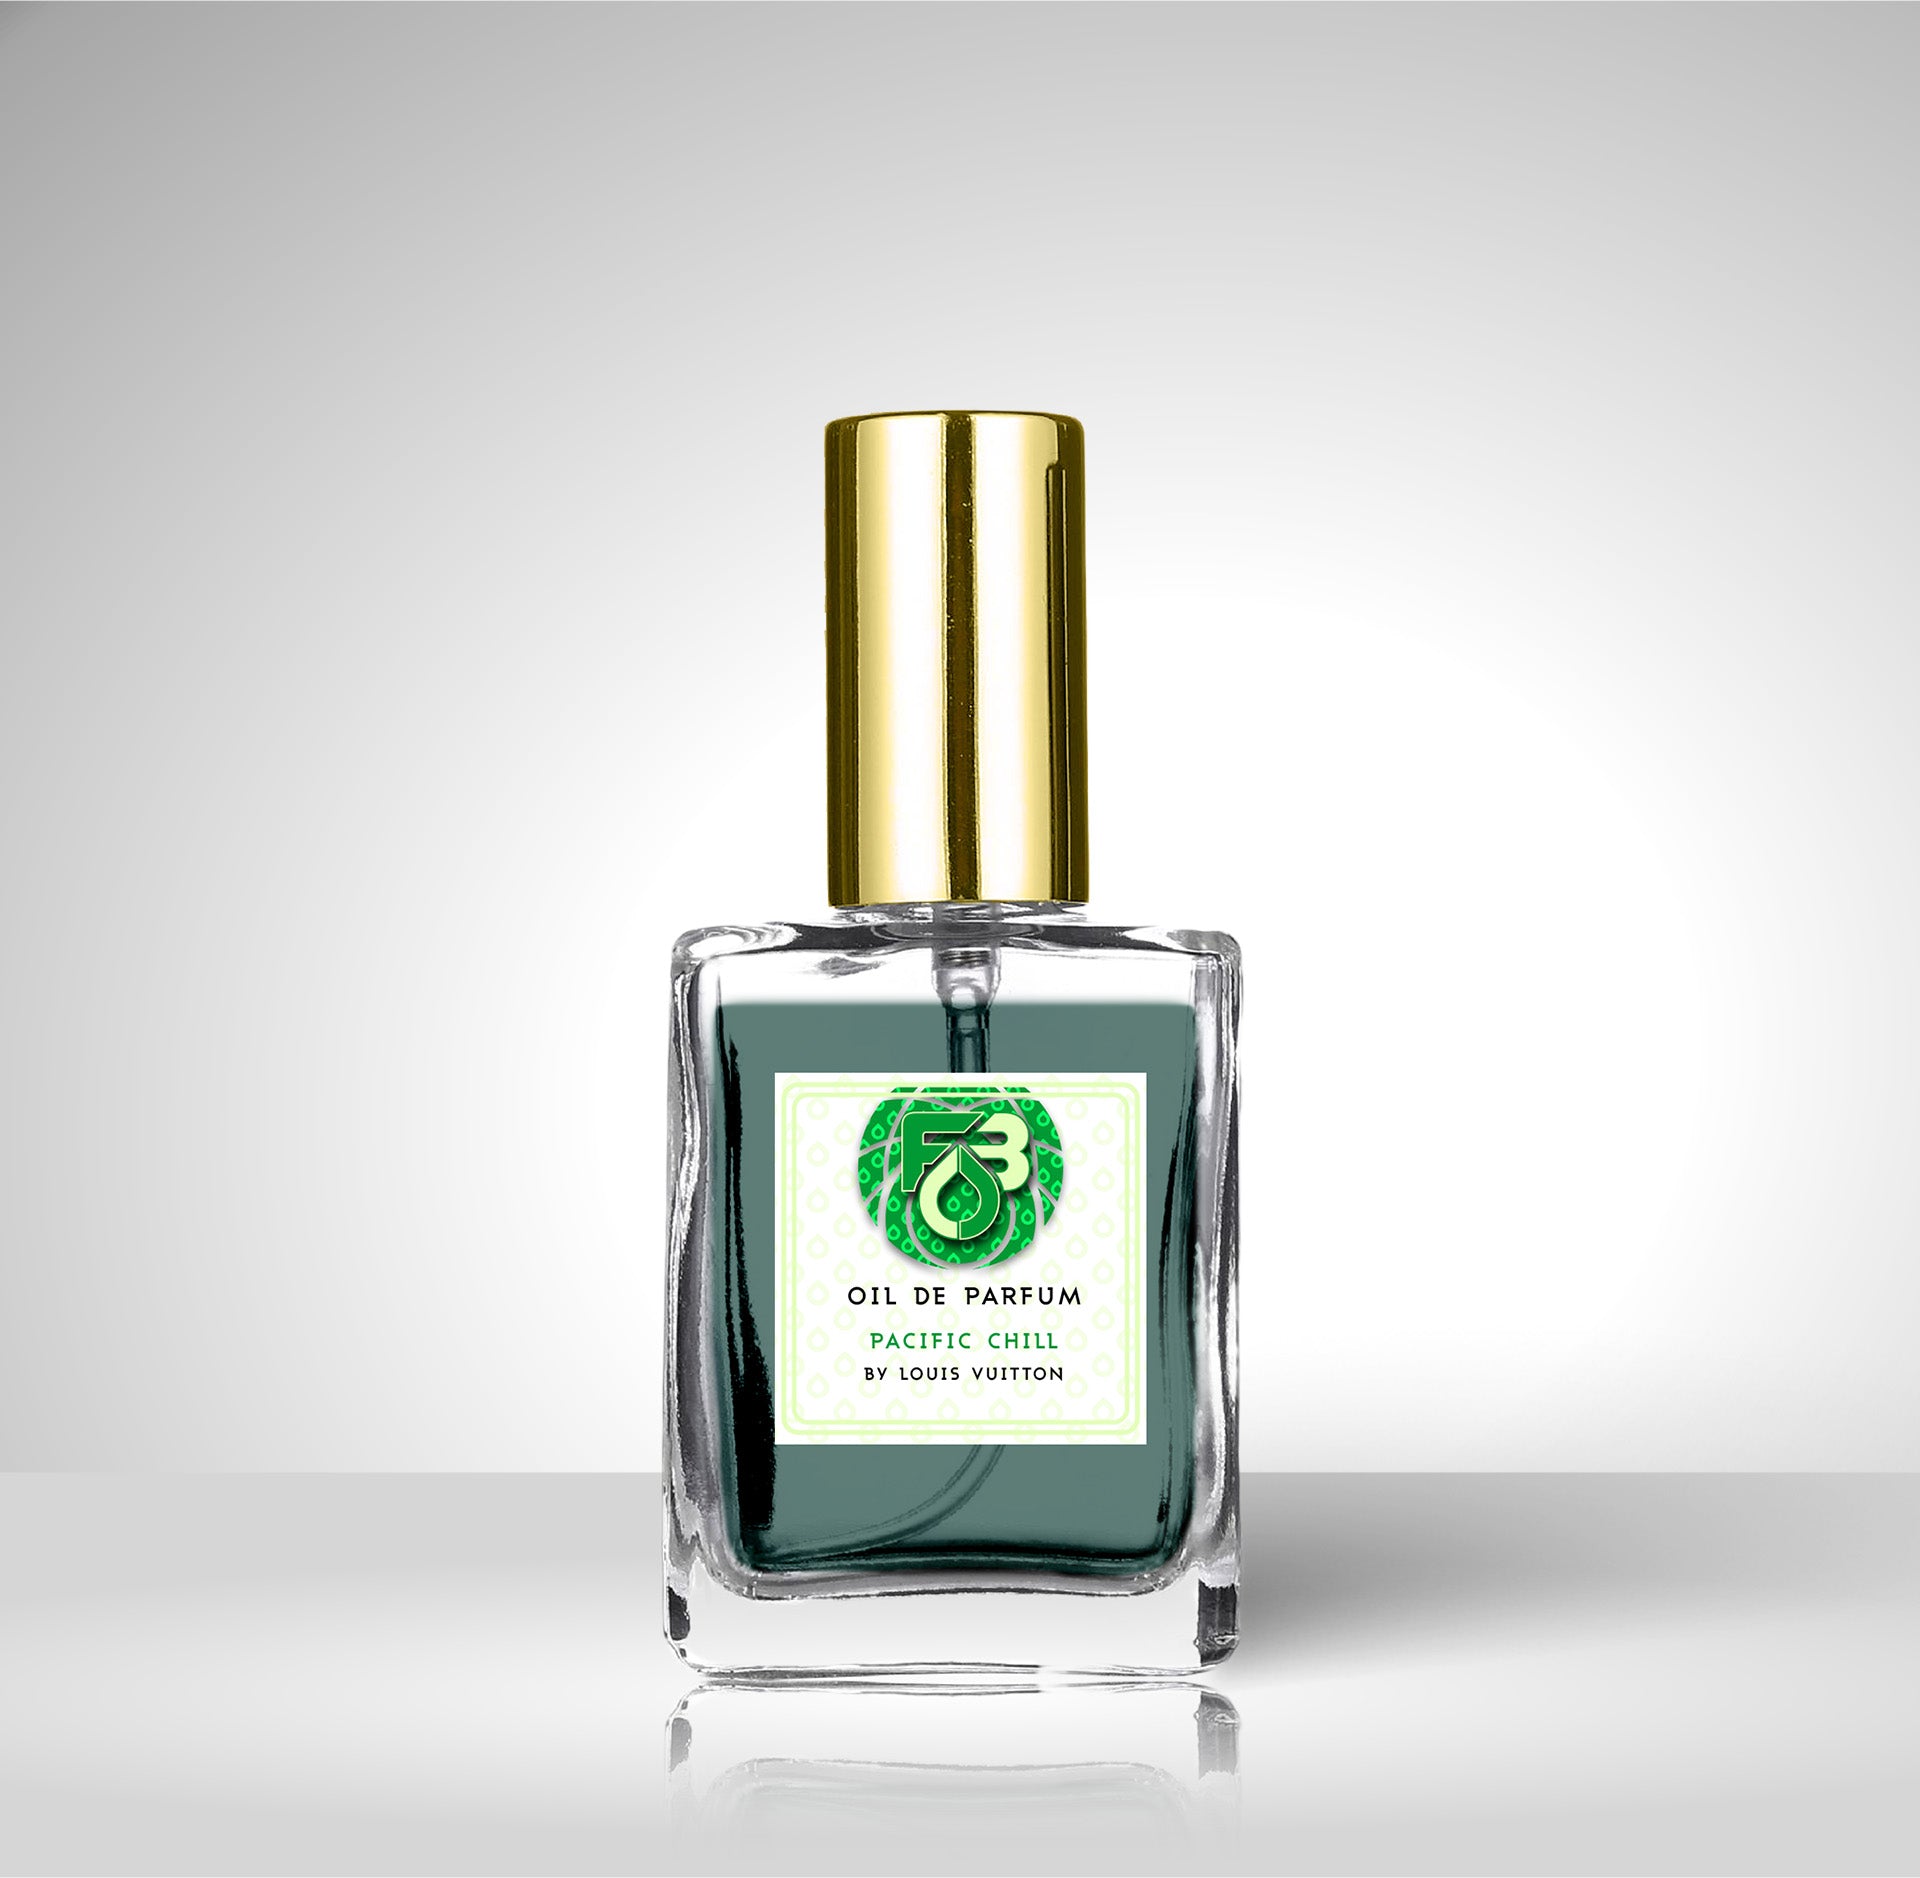 pacific chill louis vuitton perfume women